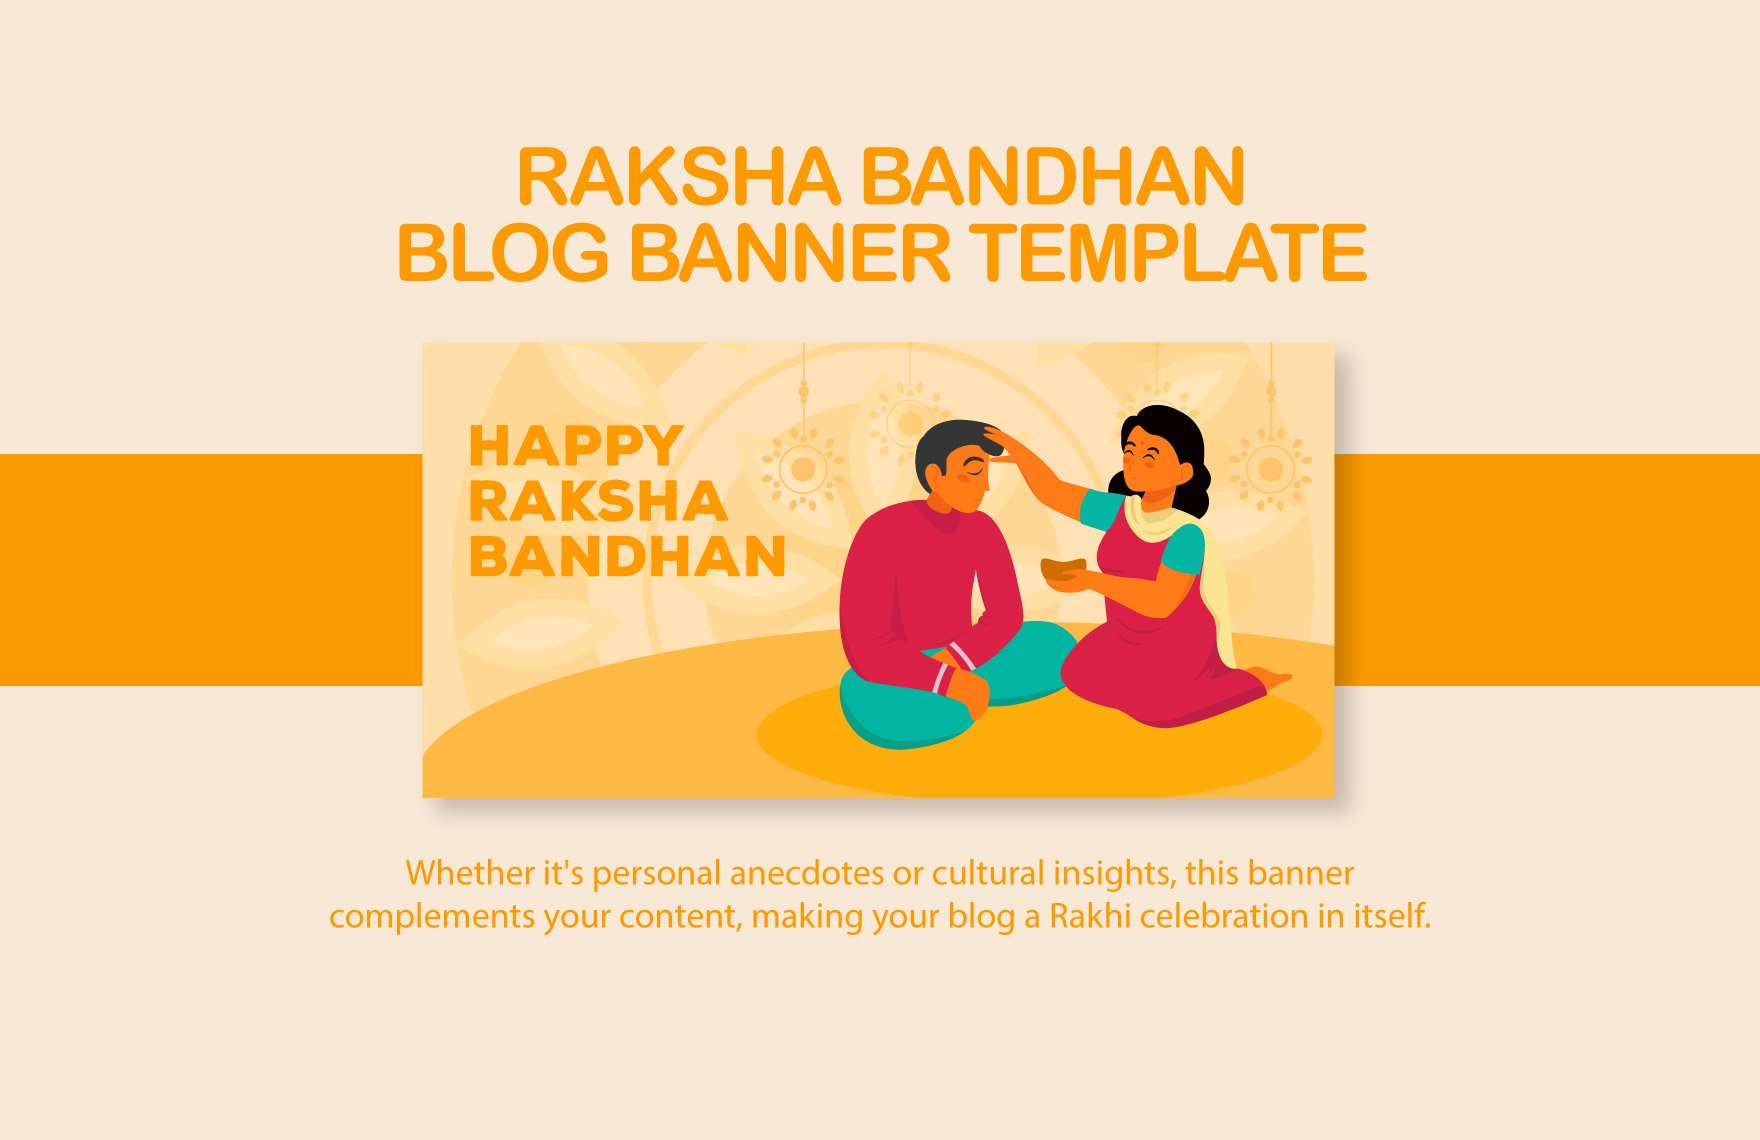 Free Raksha Bandhan Blog Banner Template in Illustrator, PSD, PNG